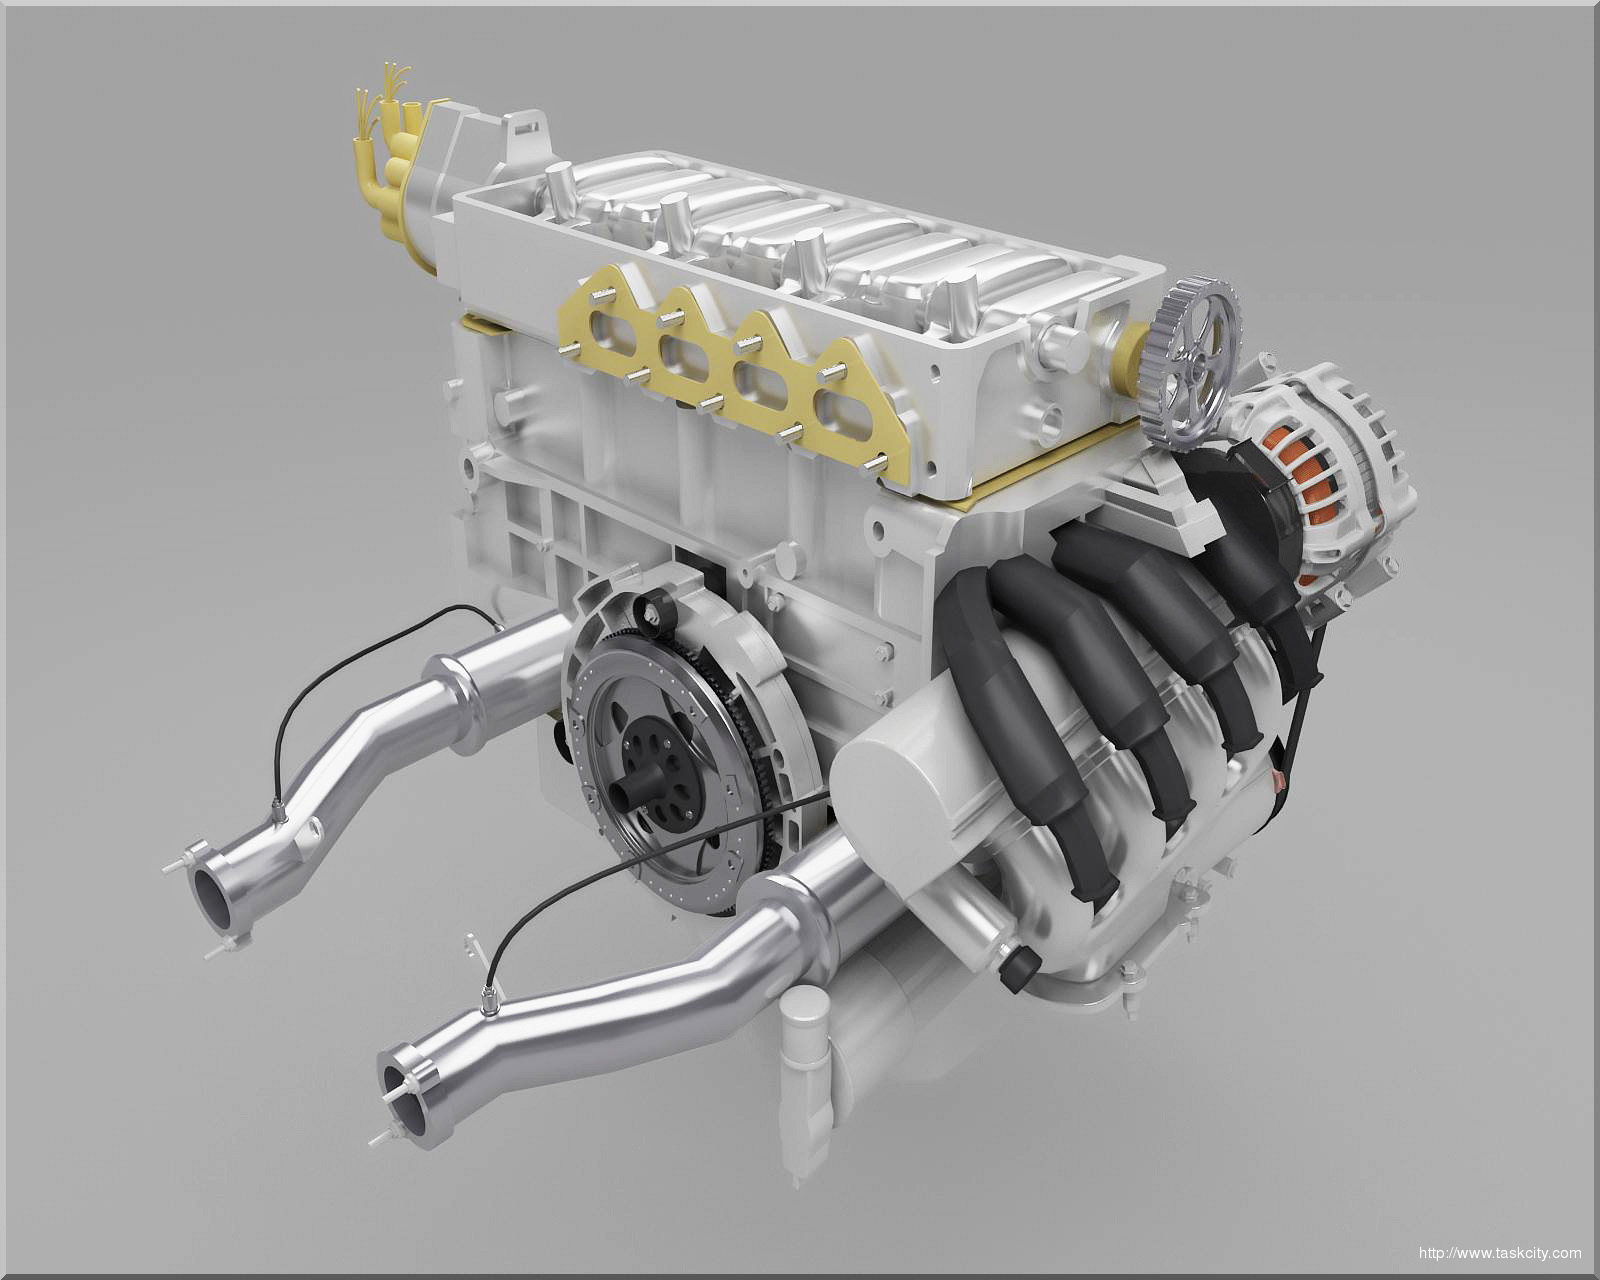 Automobile engine2